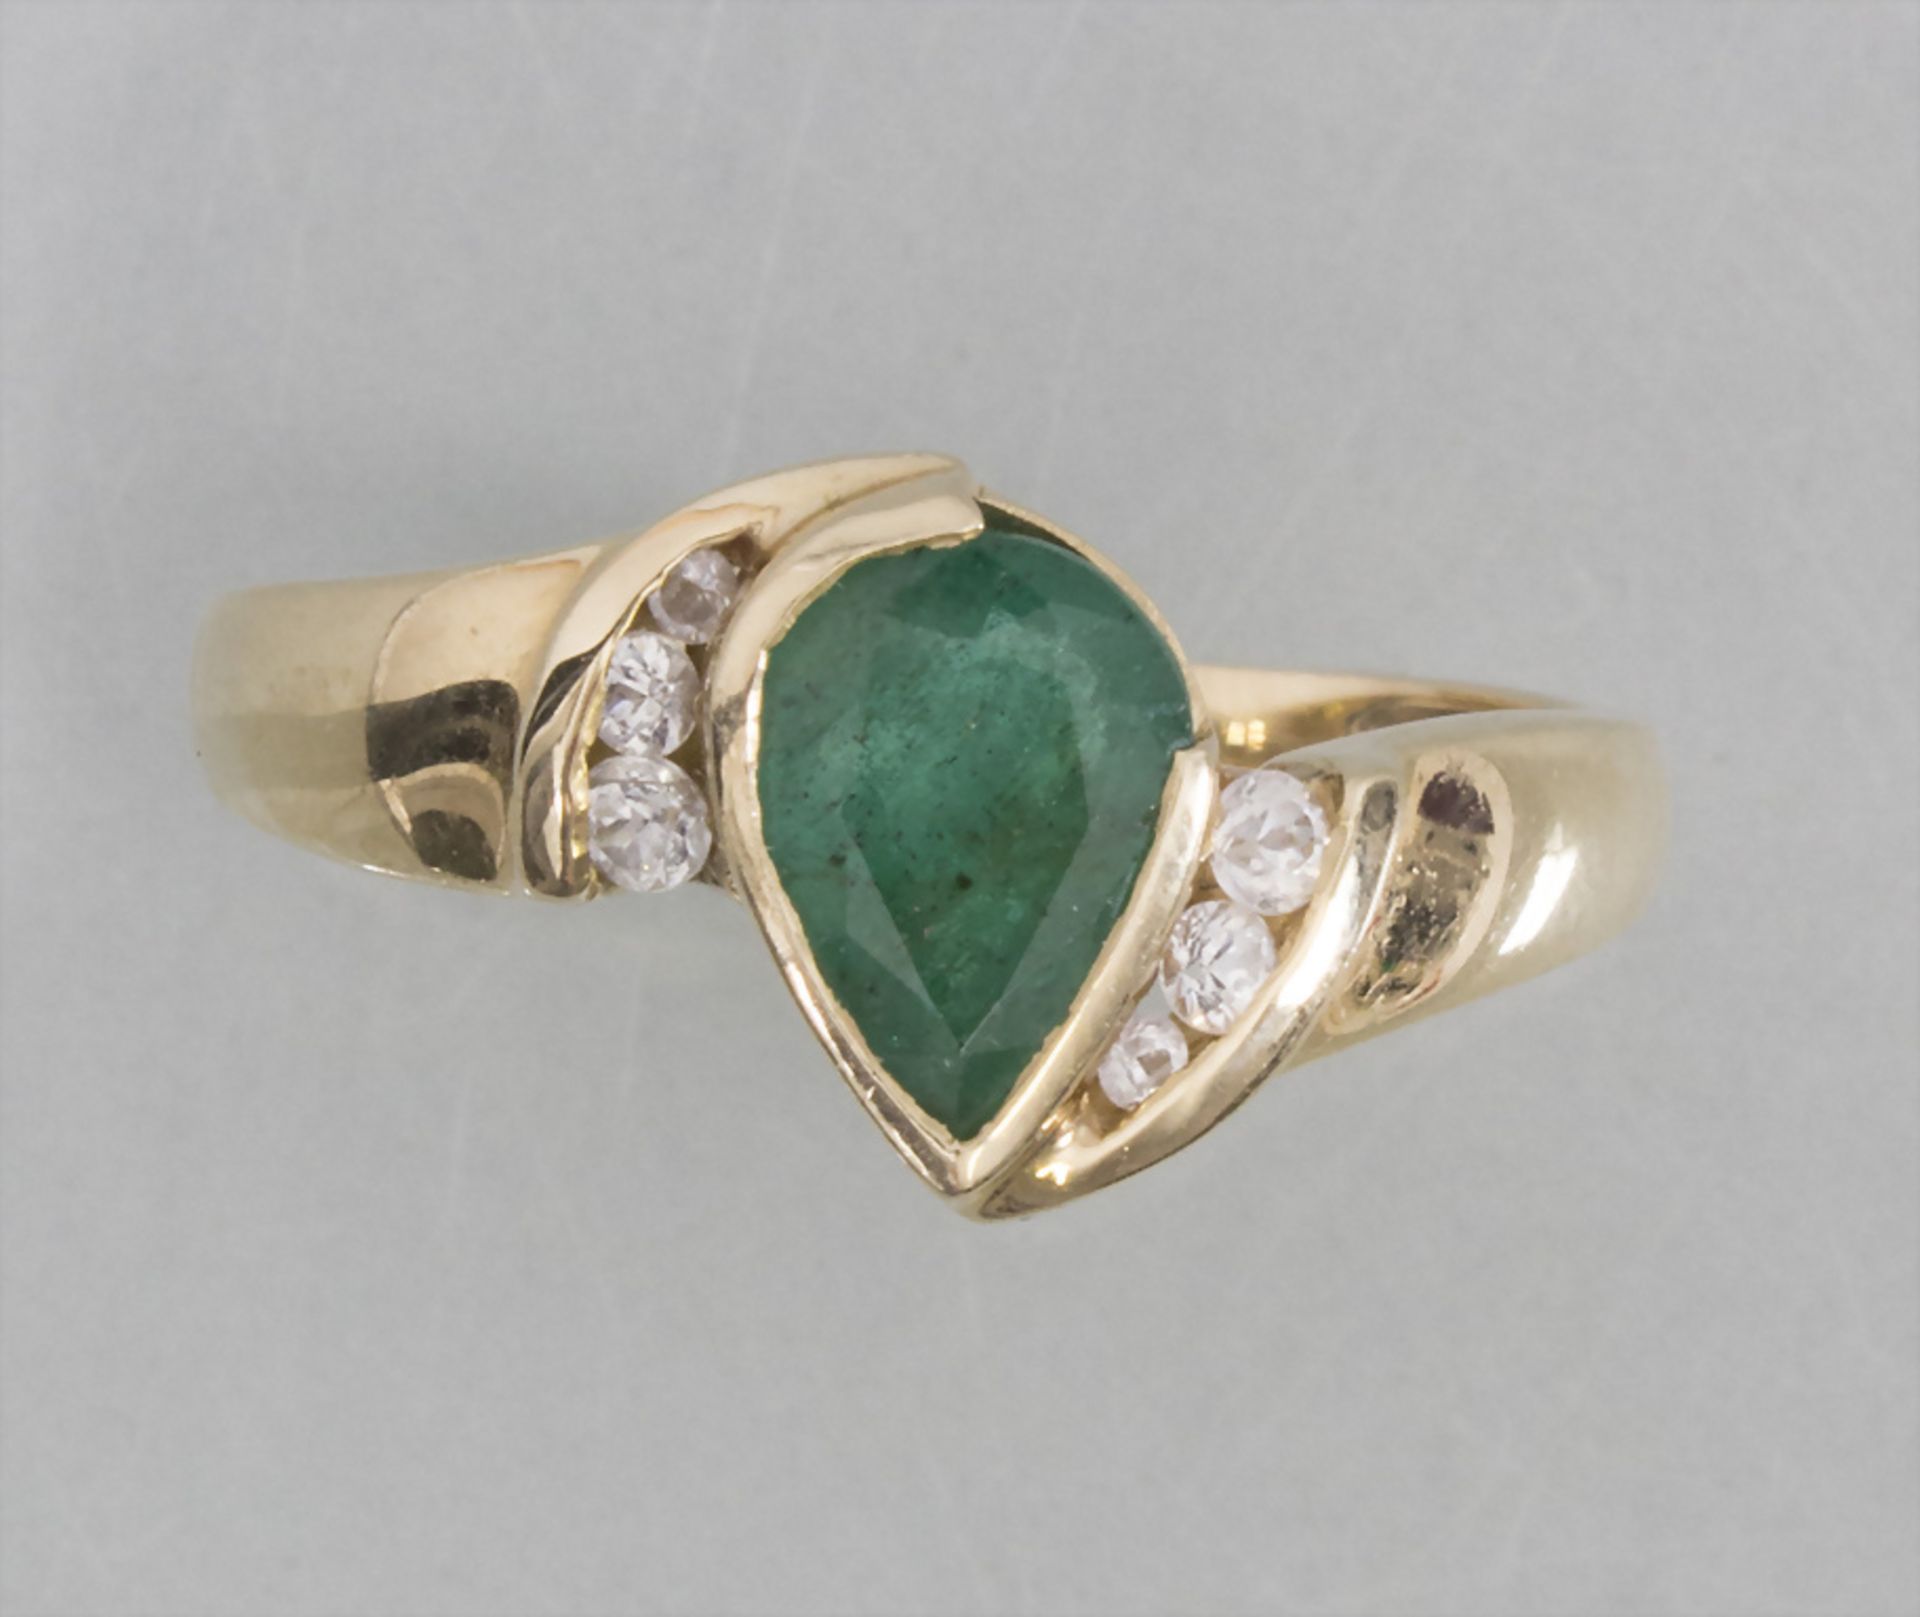 Damenring in Gelbgold mit Smaragd und Diamanten / A ladies 14k gold ring with emerald and diamonds